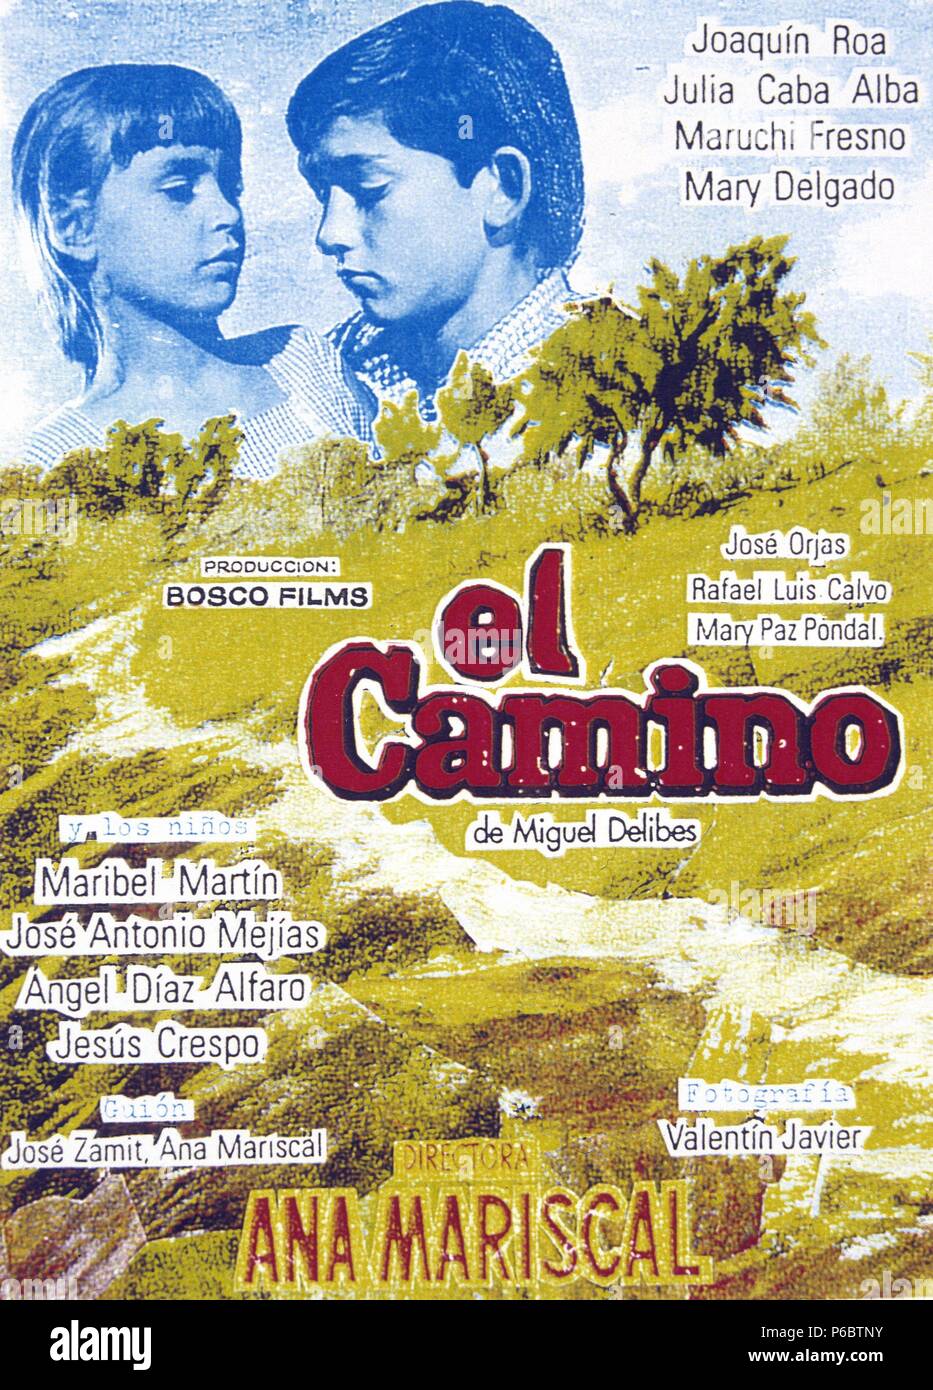 PELICULA : EL Camino , 1964. BASADA EN LA OBRA HOMONIMA DE MIGUEL DELIBES.  Direttore : ANA MARISCAL. ACTORES : JOAQUIN ROA , JULIA CABA ALBA Foto  stock - Alamy